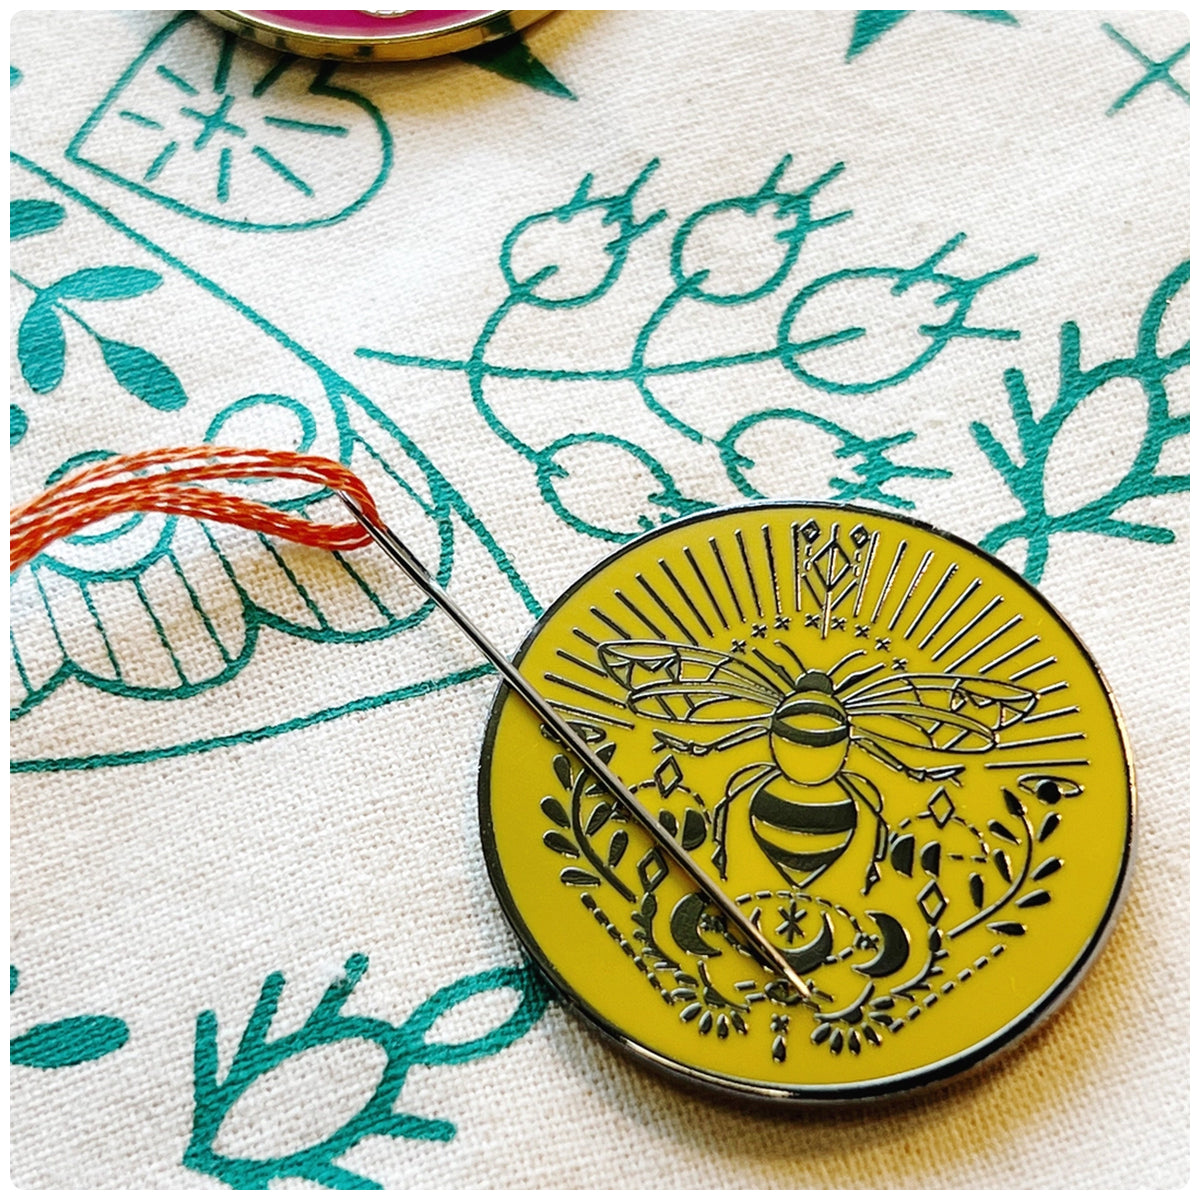 Bee Needle Minder